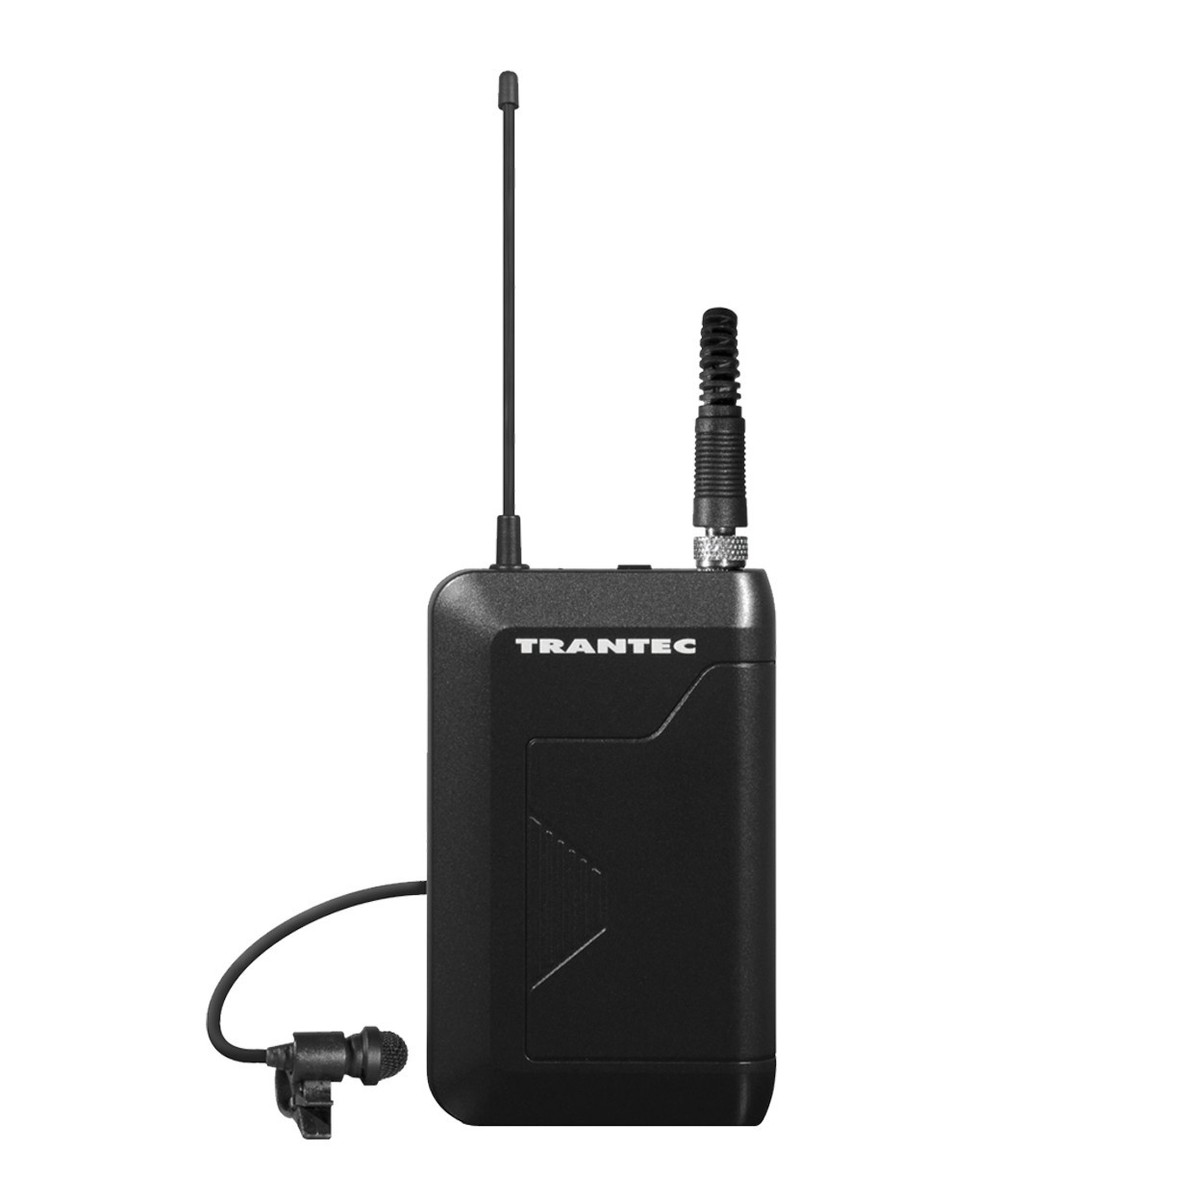 Trantec S4.10 L UHF Lapel Microphone System